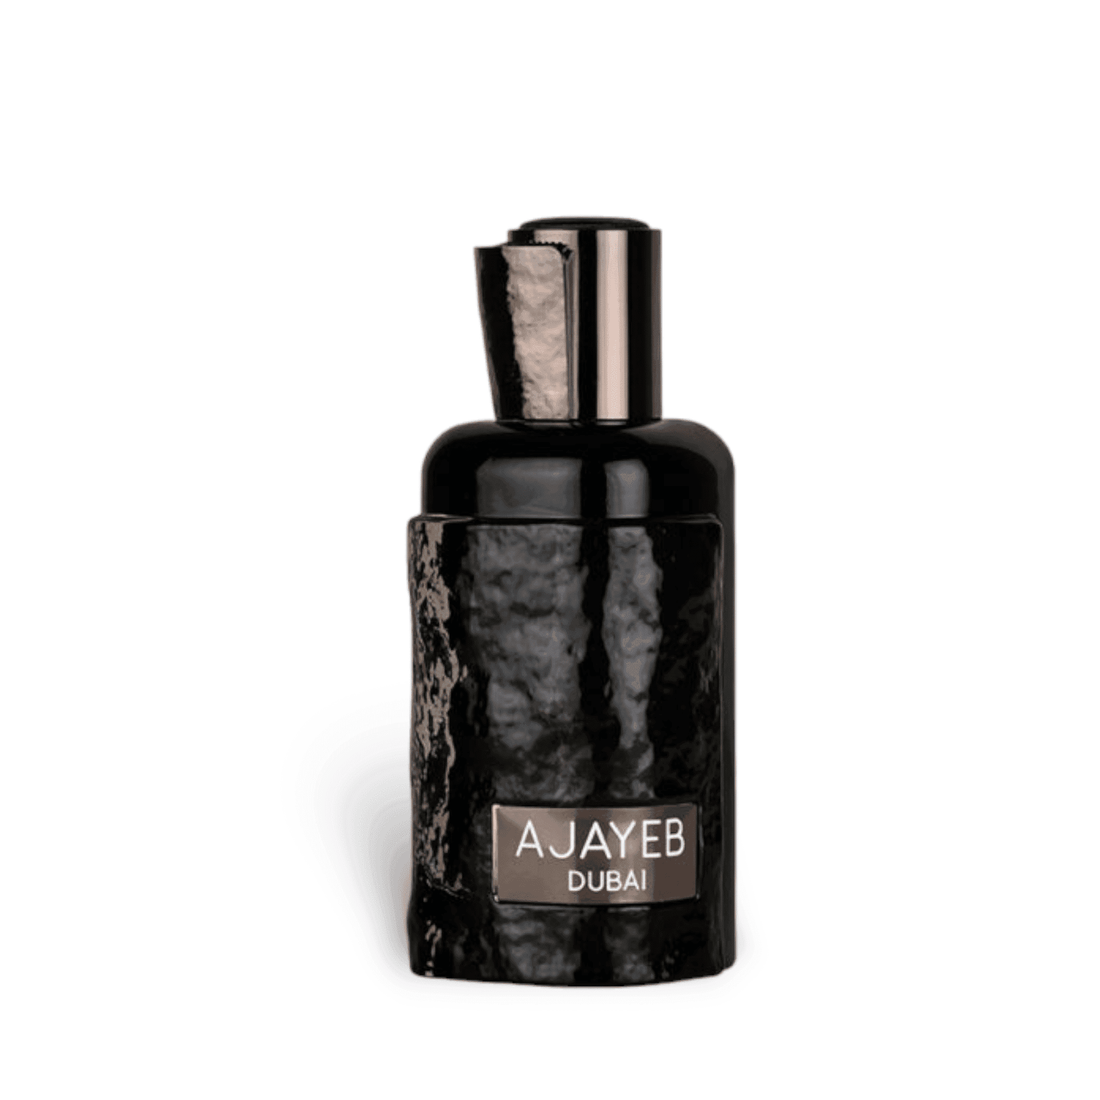 Ajayeb Dubai by Lattafa perfume showcasing enticing saffron and pineapple notes